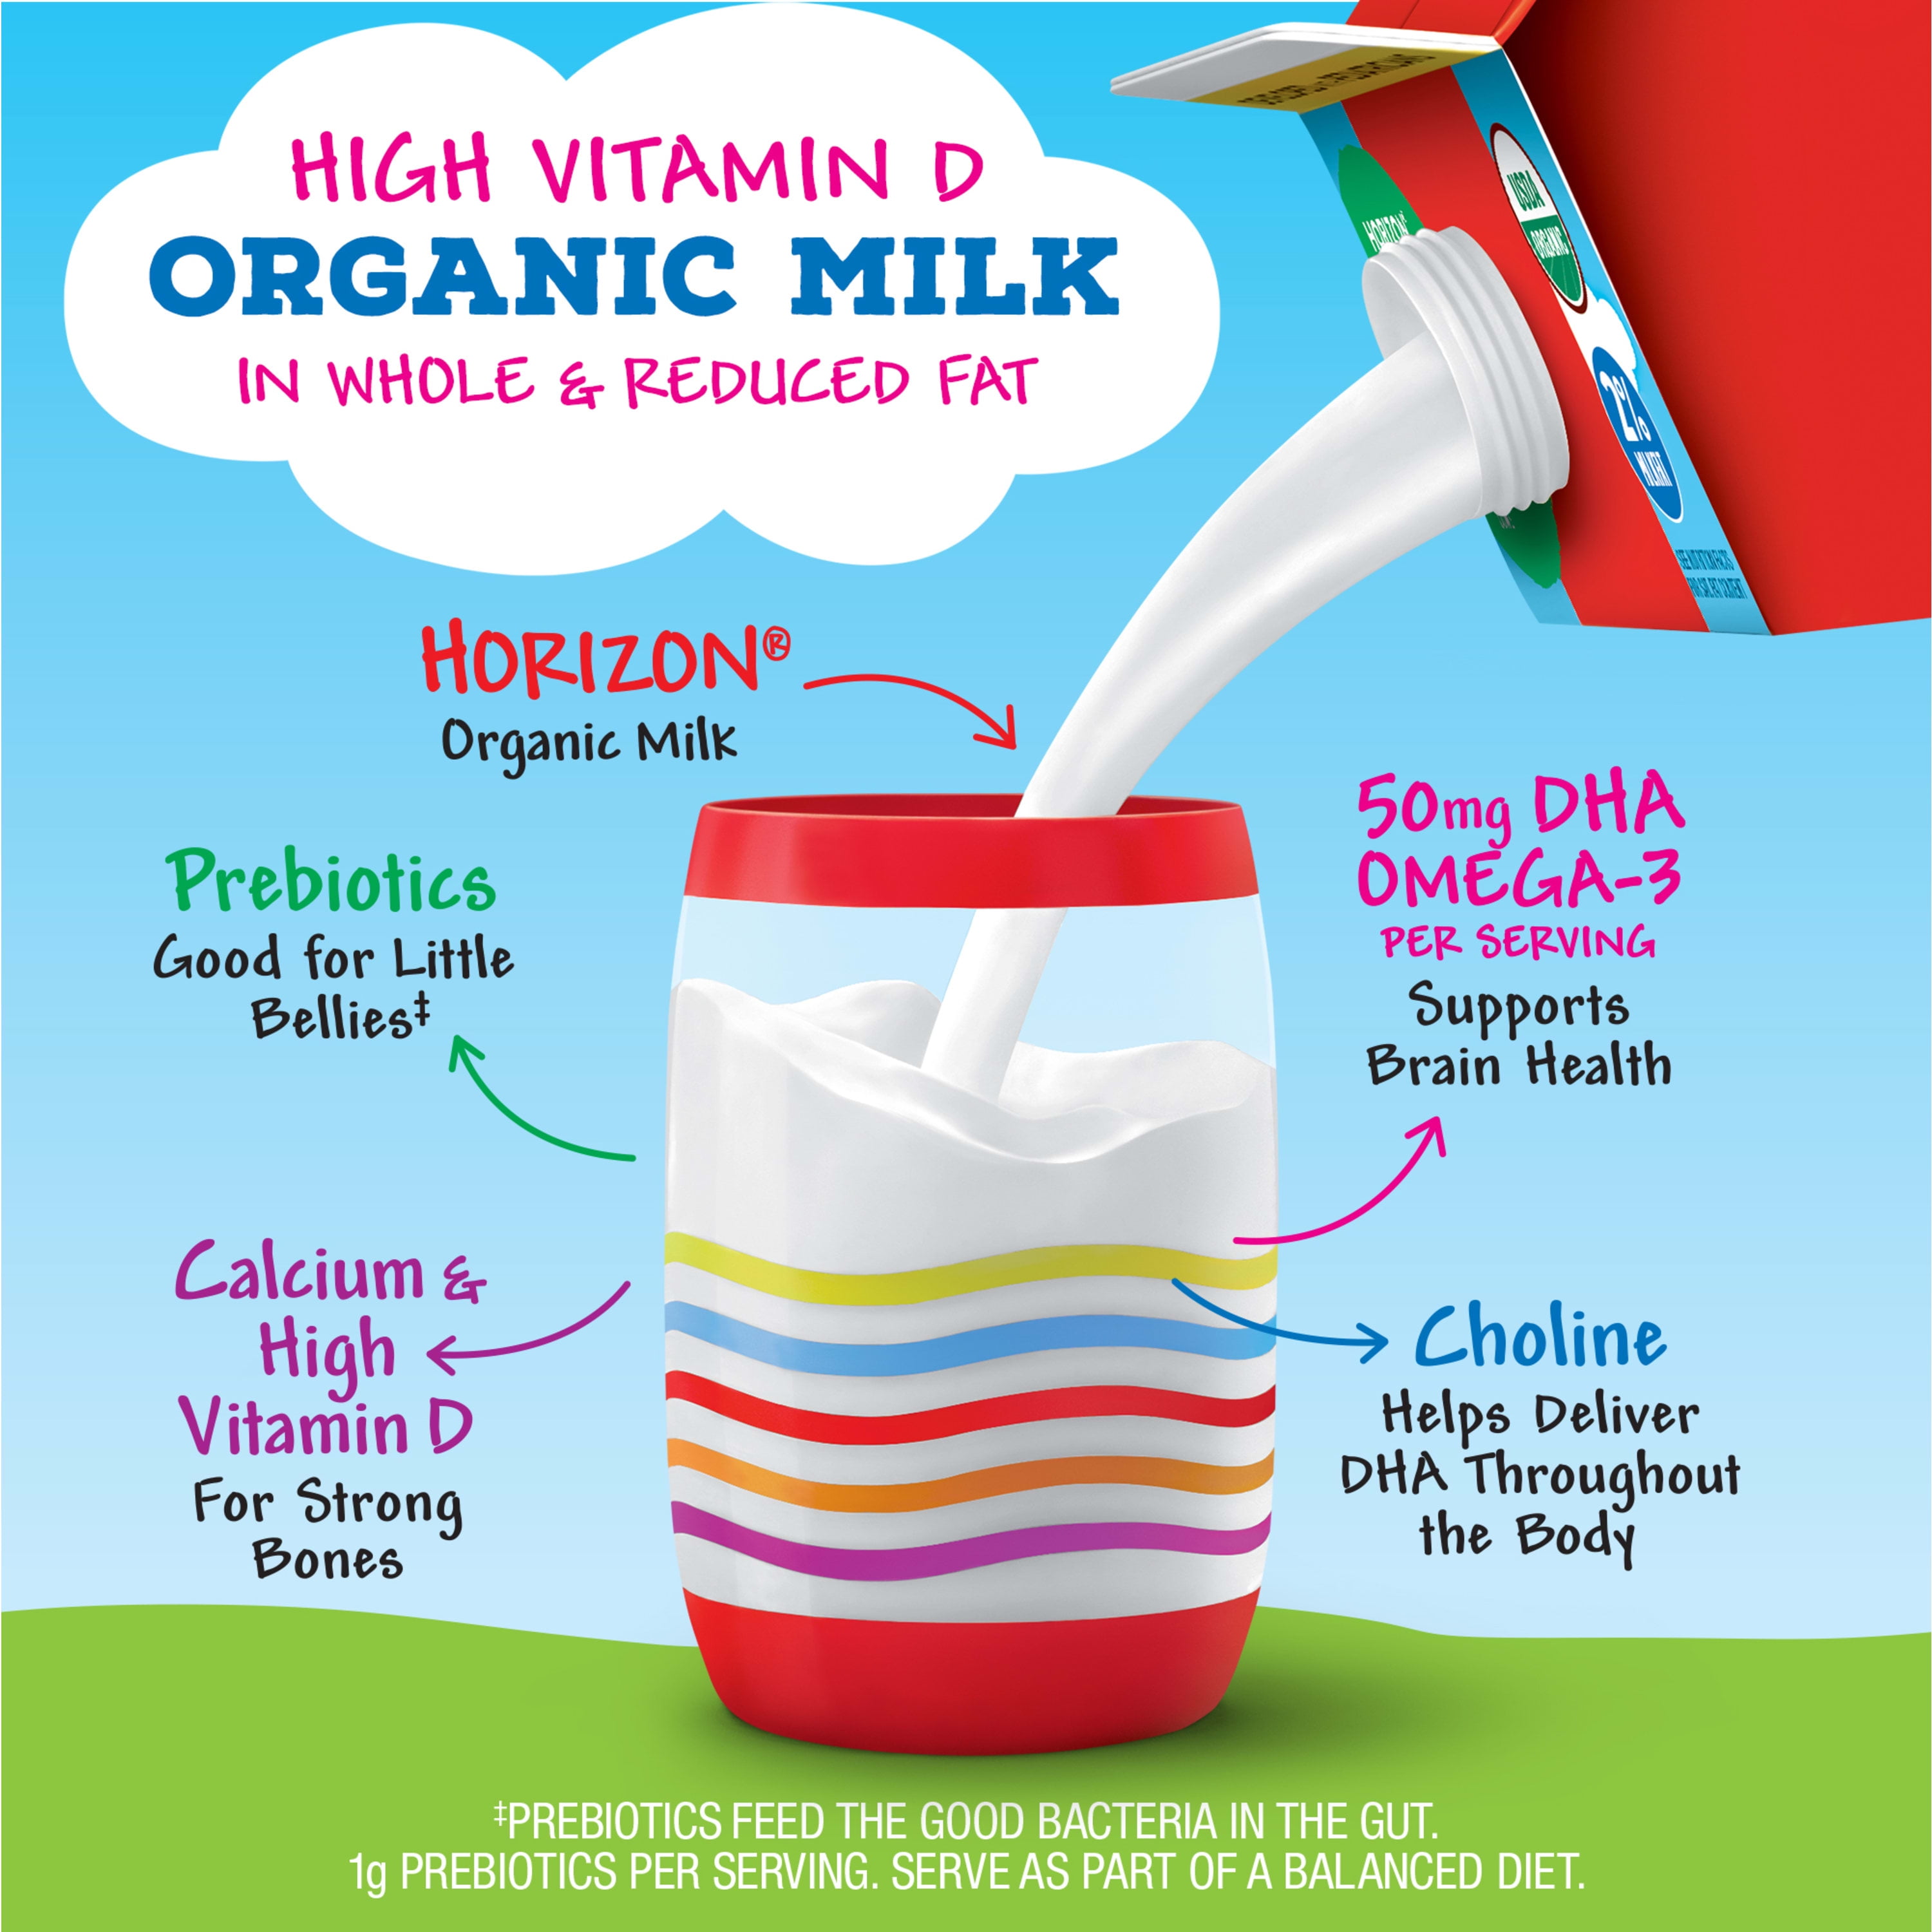 Horizon Growing Years® Organic Whole Milk for Kids